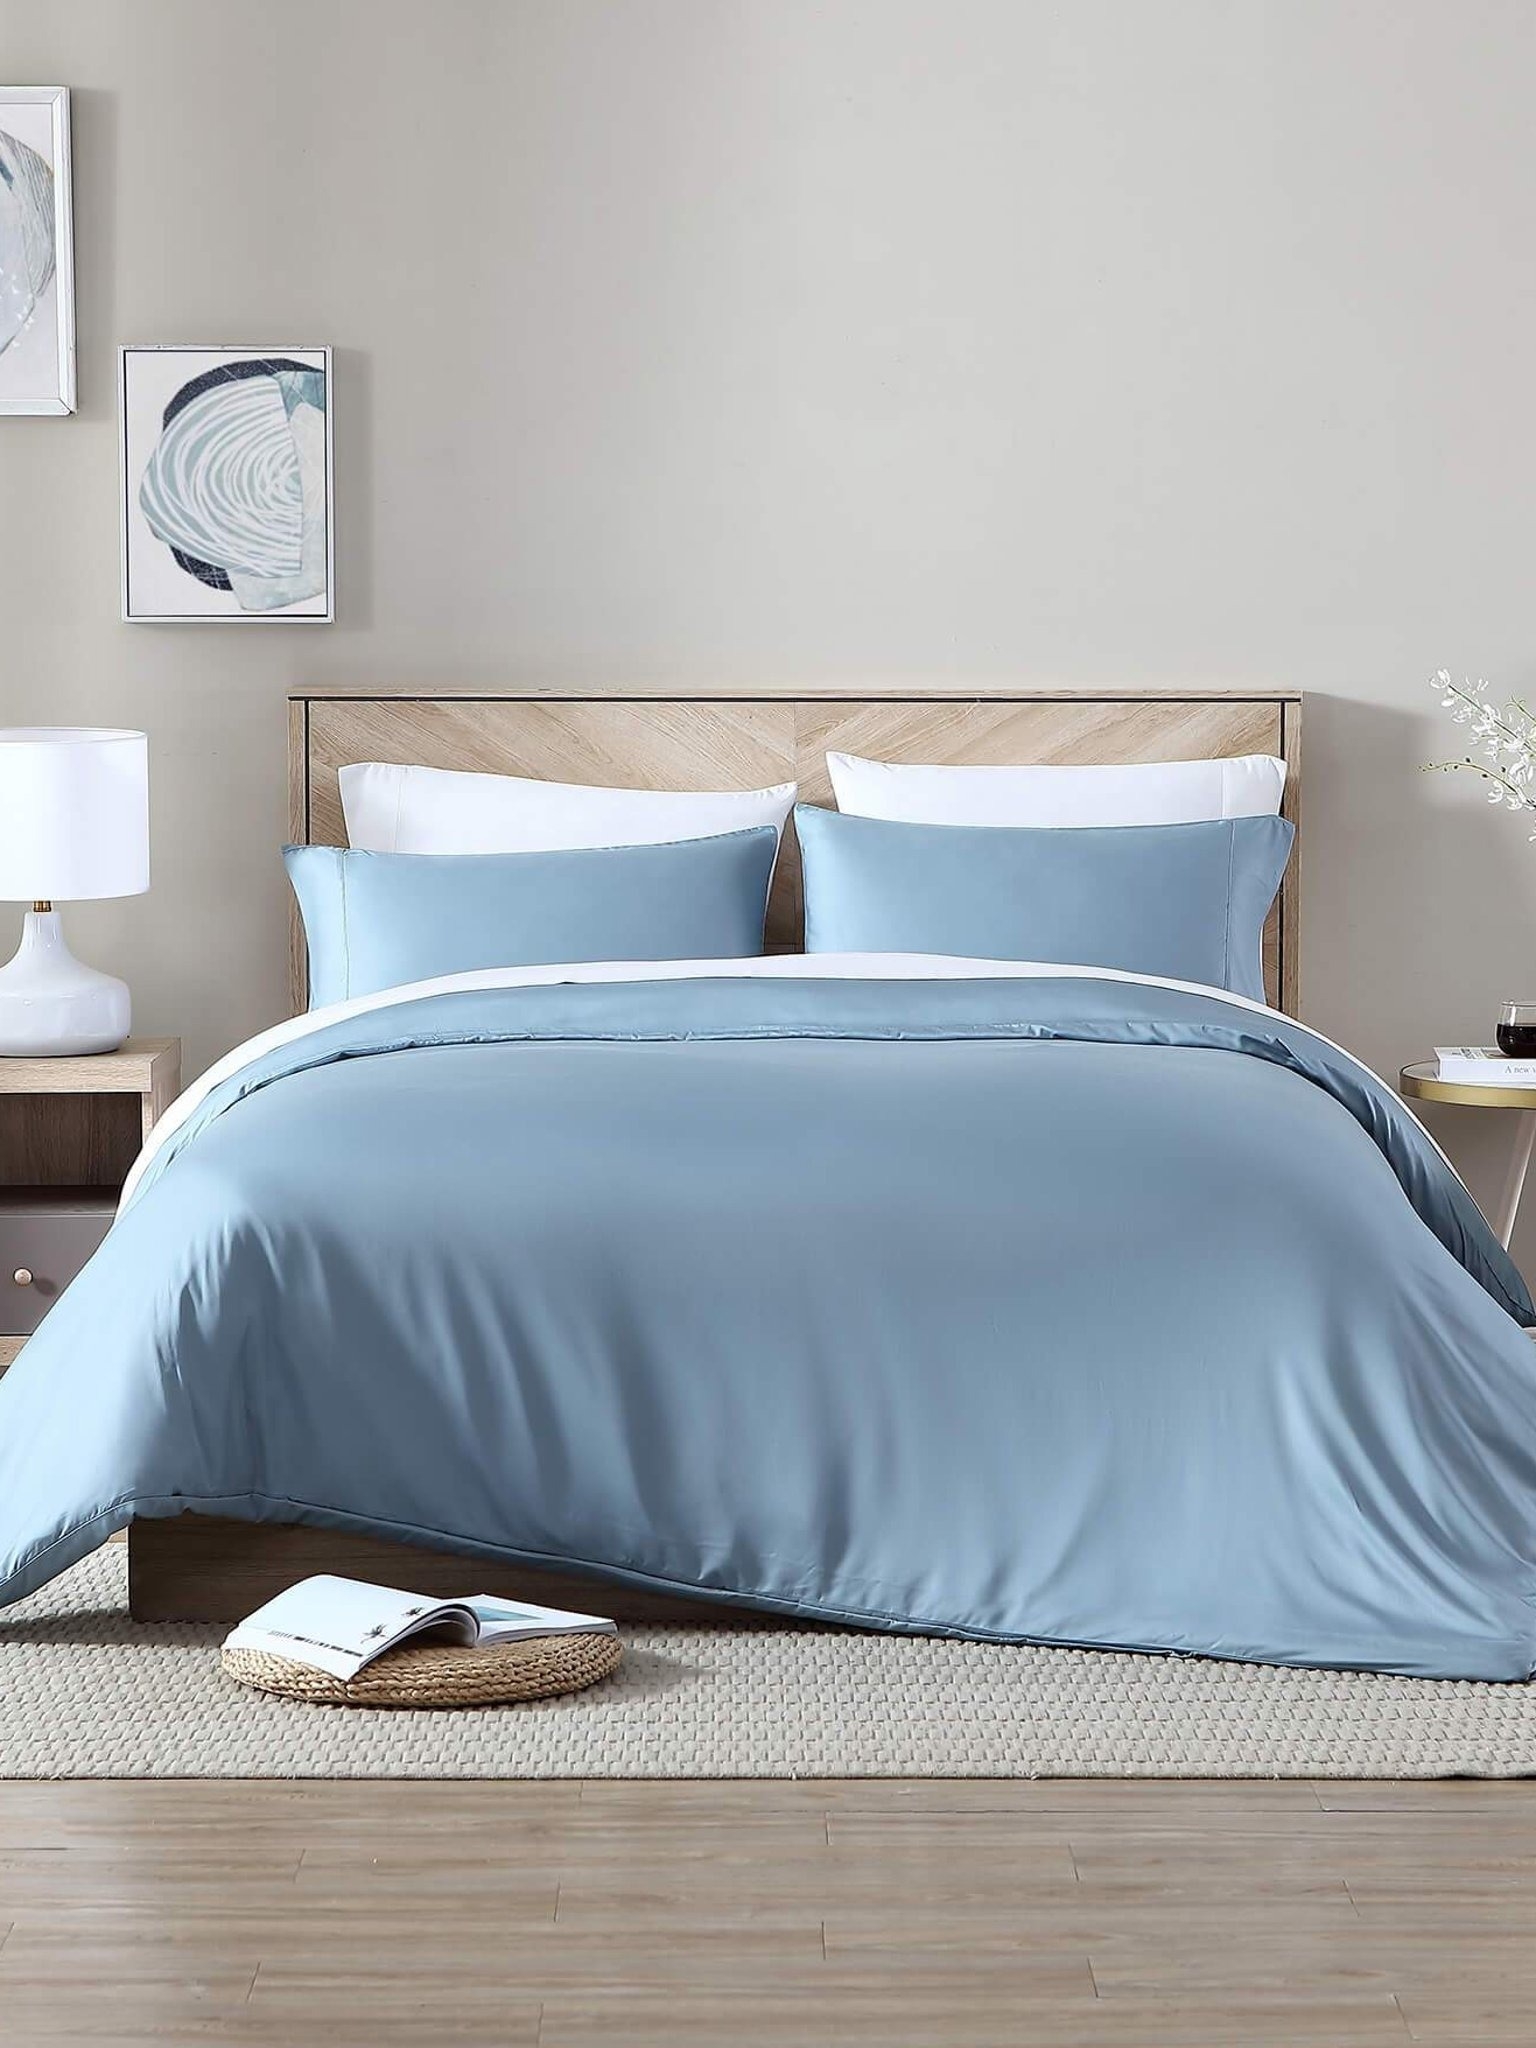 blue bamboo duvet cover on bed